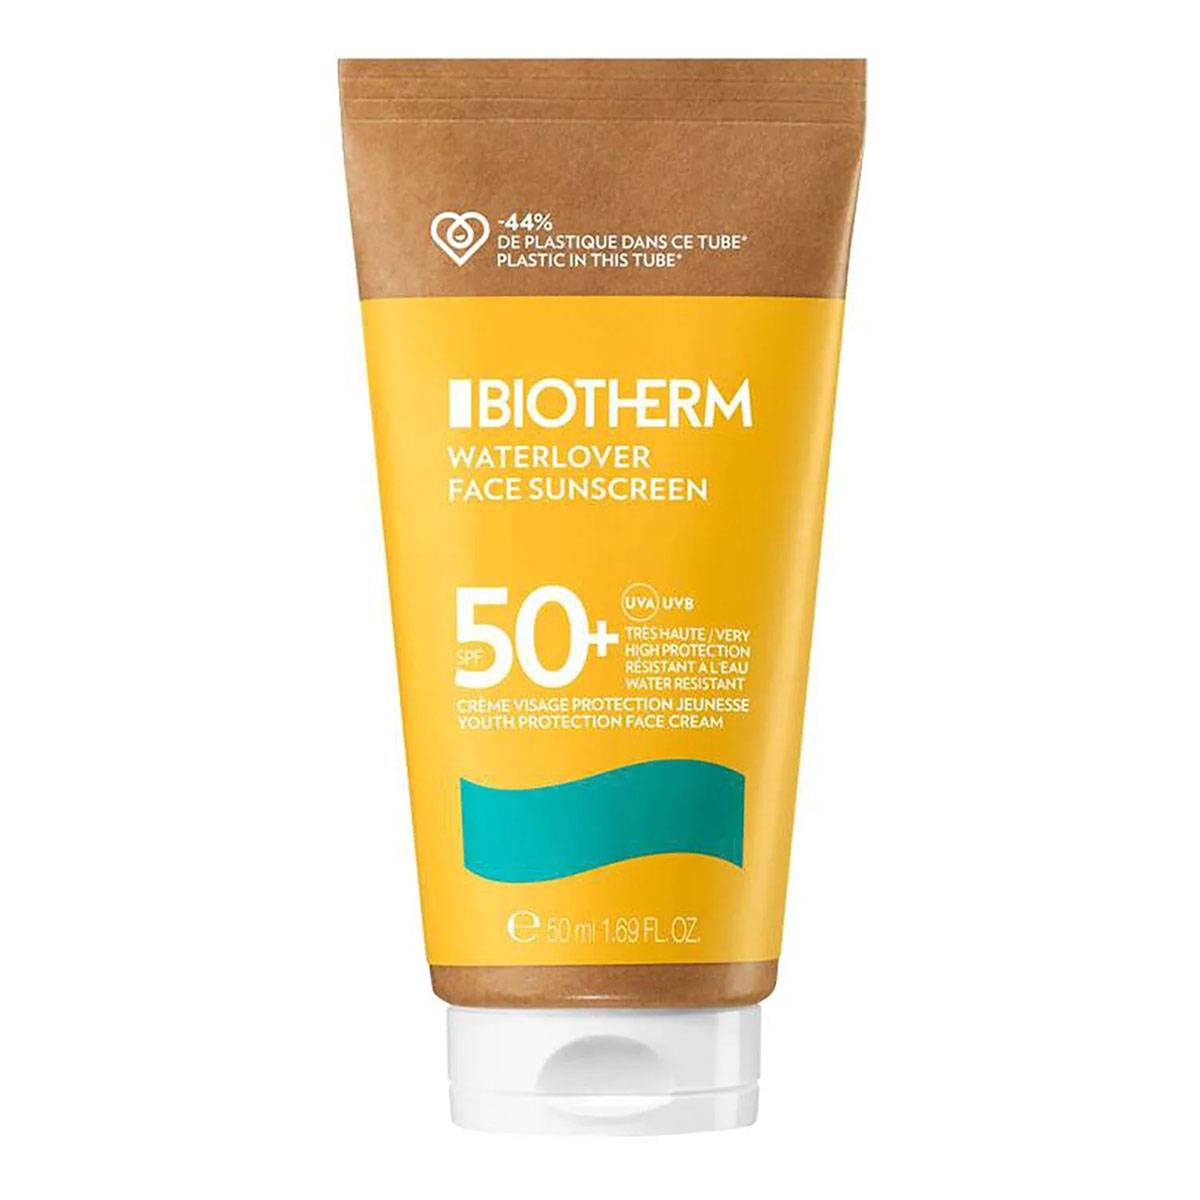 Krem z filtrem SPF50 Waterlover Face Sunscreen /119 zł, Sephora.pl / (Fot. Materiały prasowe)